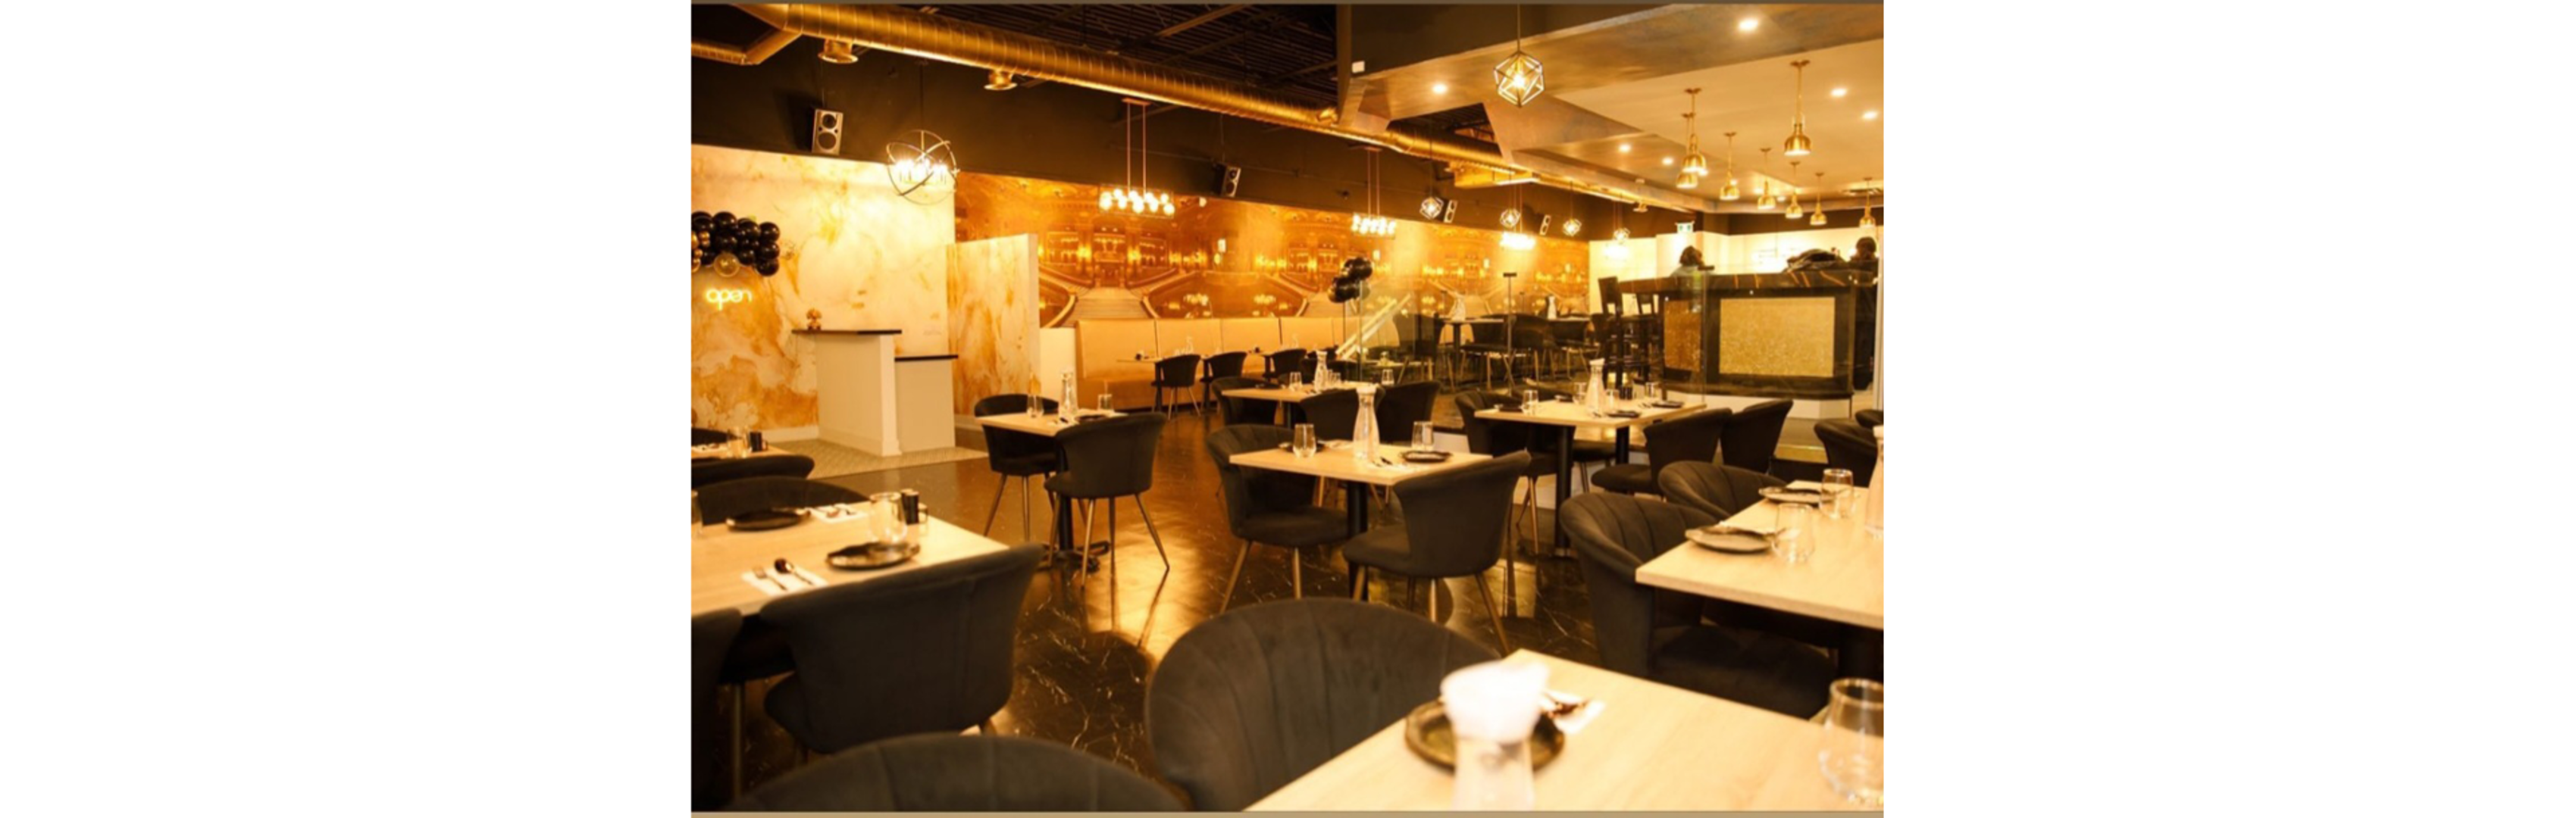 Qila Bar & Grill Restaurant - Picture